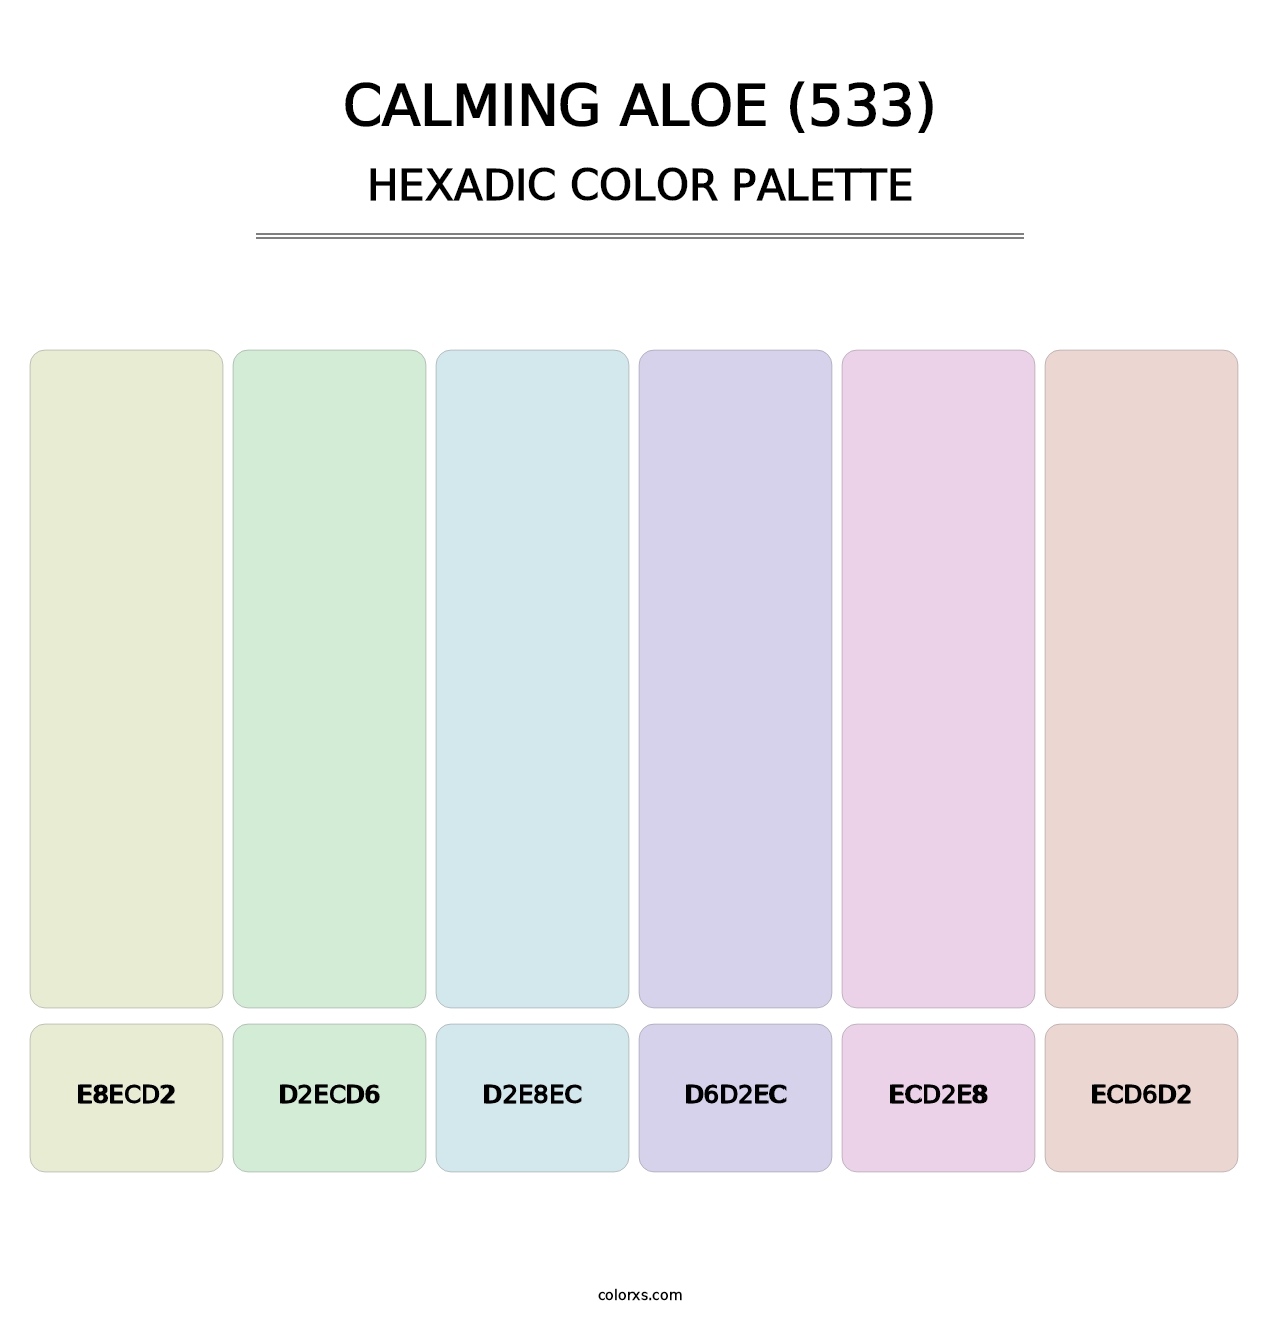 Calming Aloe (533) - Hexadic Color Palette